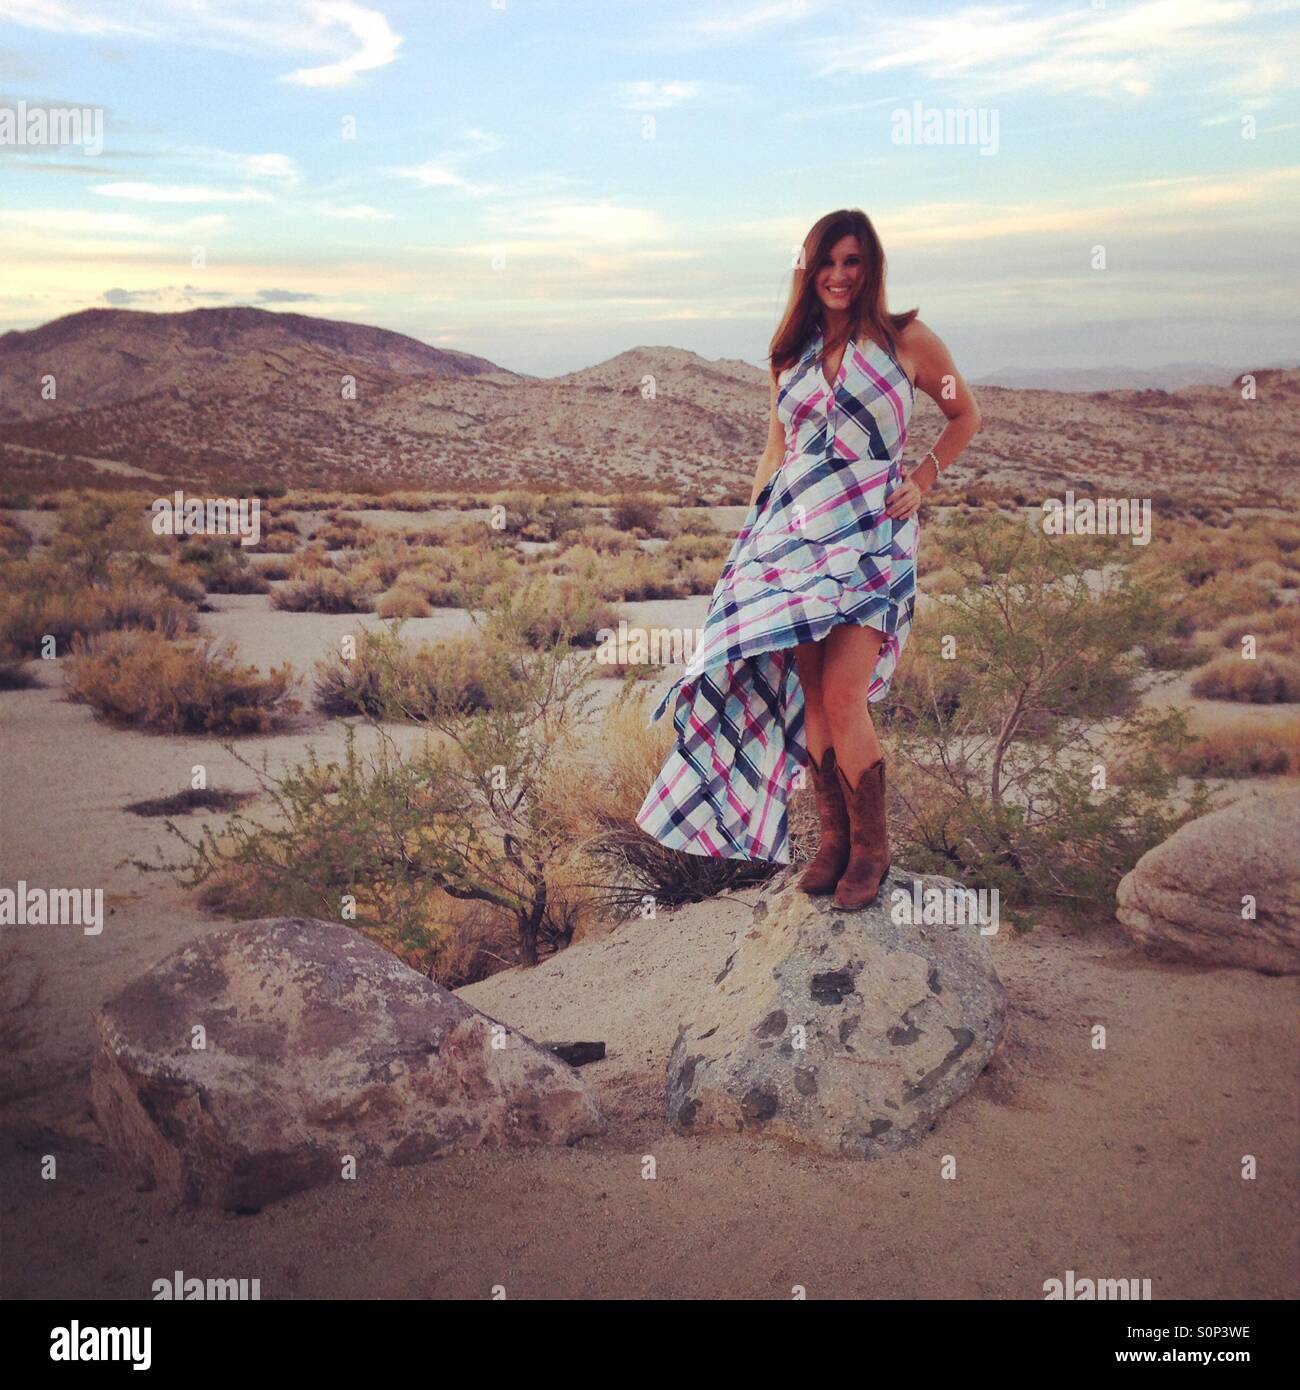 Desert diva Stock Photo - Alamy